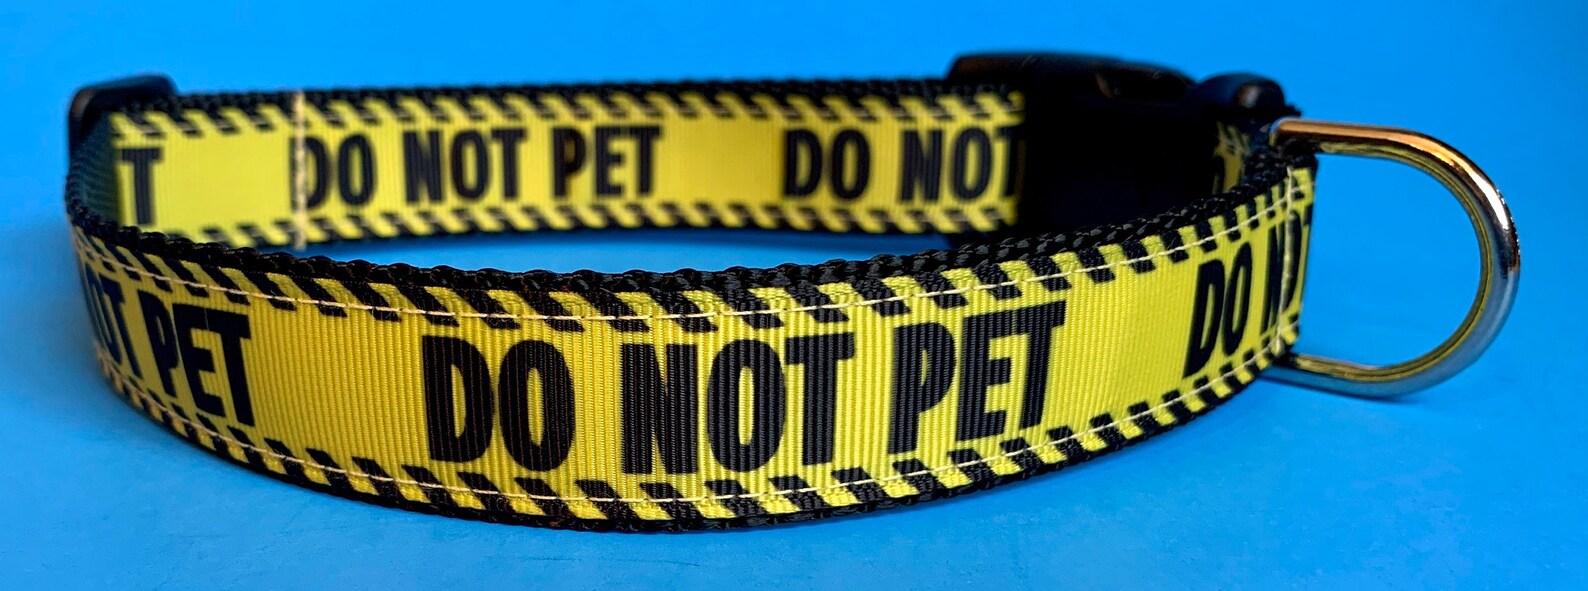 DO NOT PET Dog Collar - Etsy